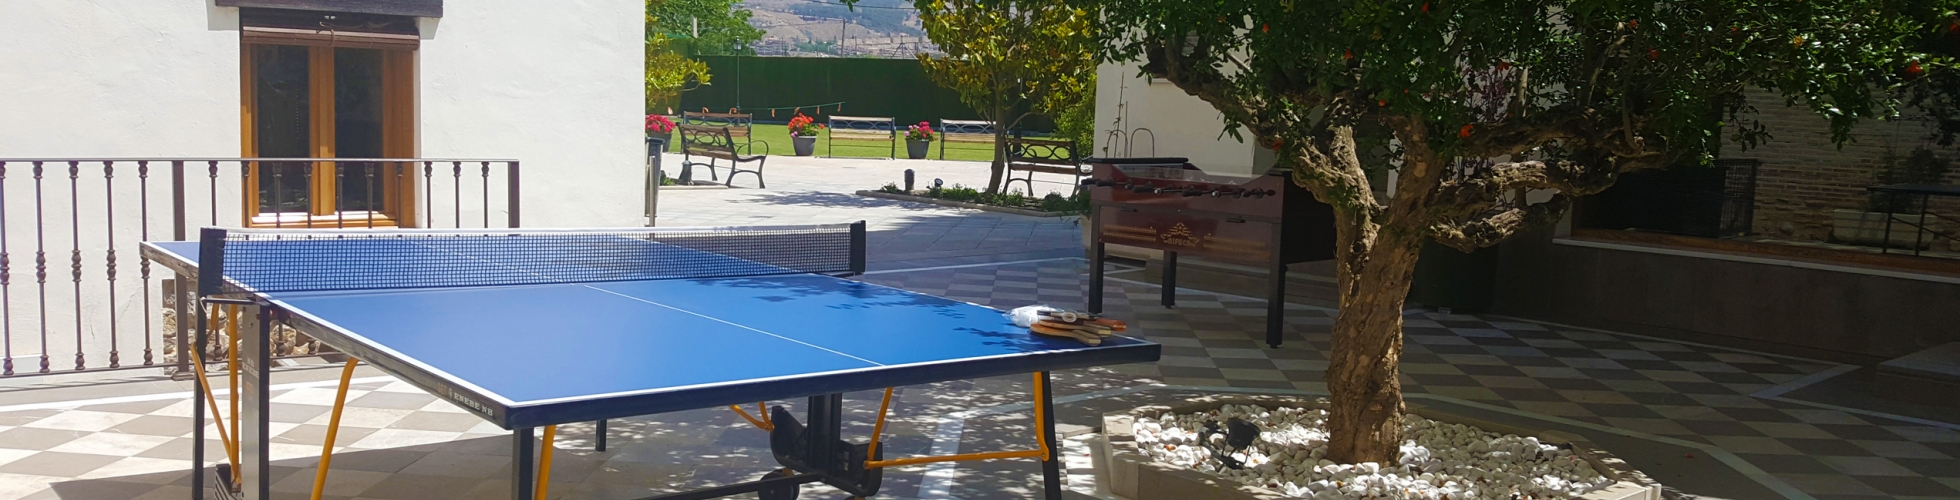 Alquiler de Mesa de Ping Pong Granada